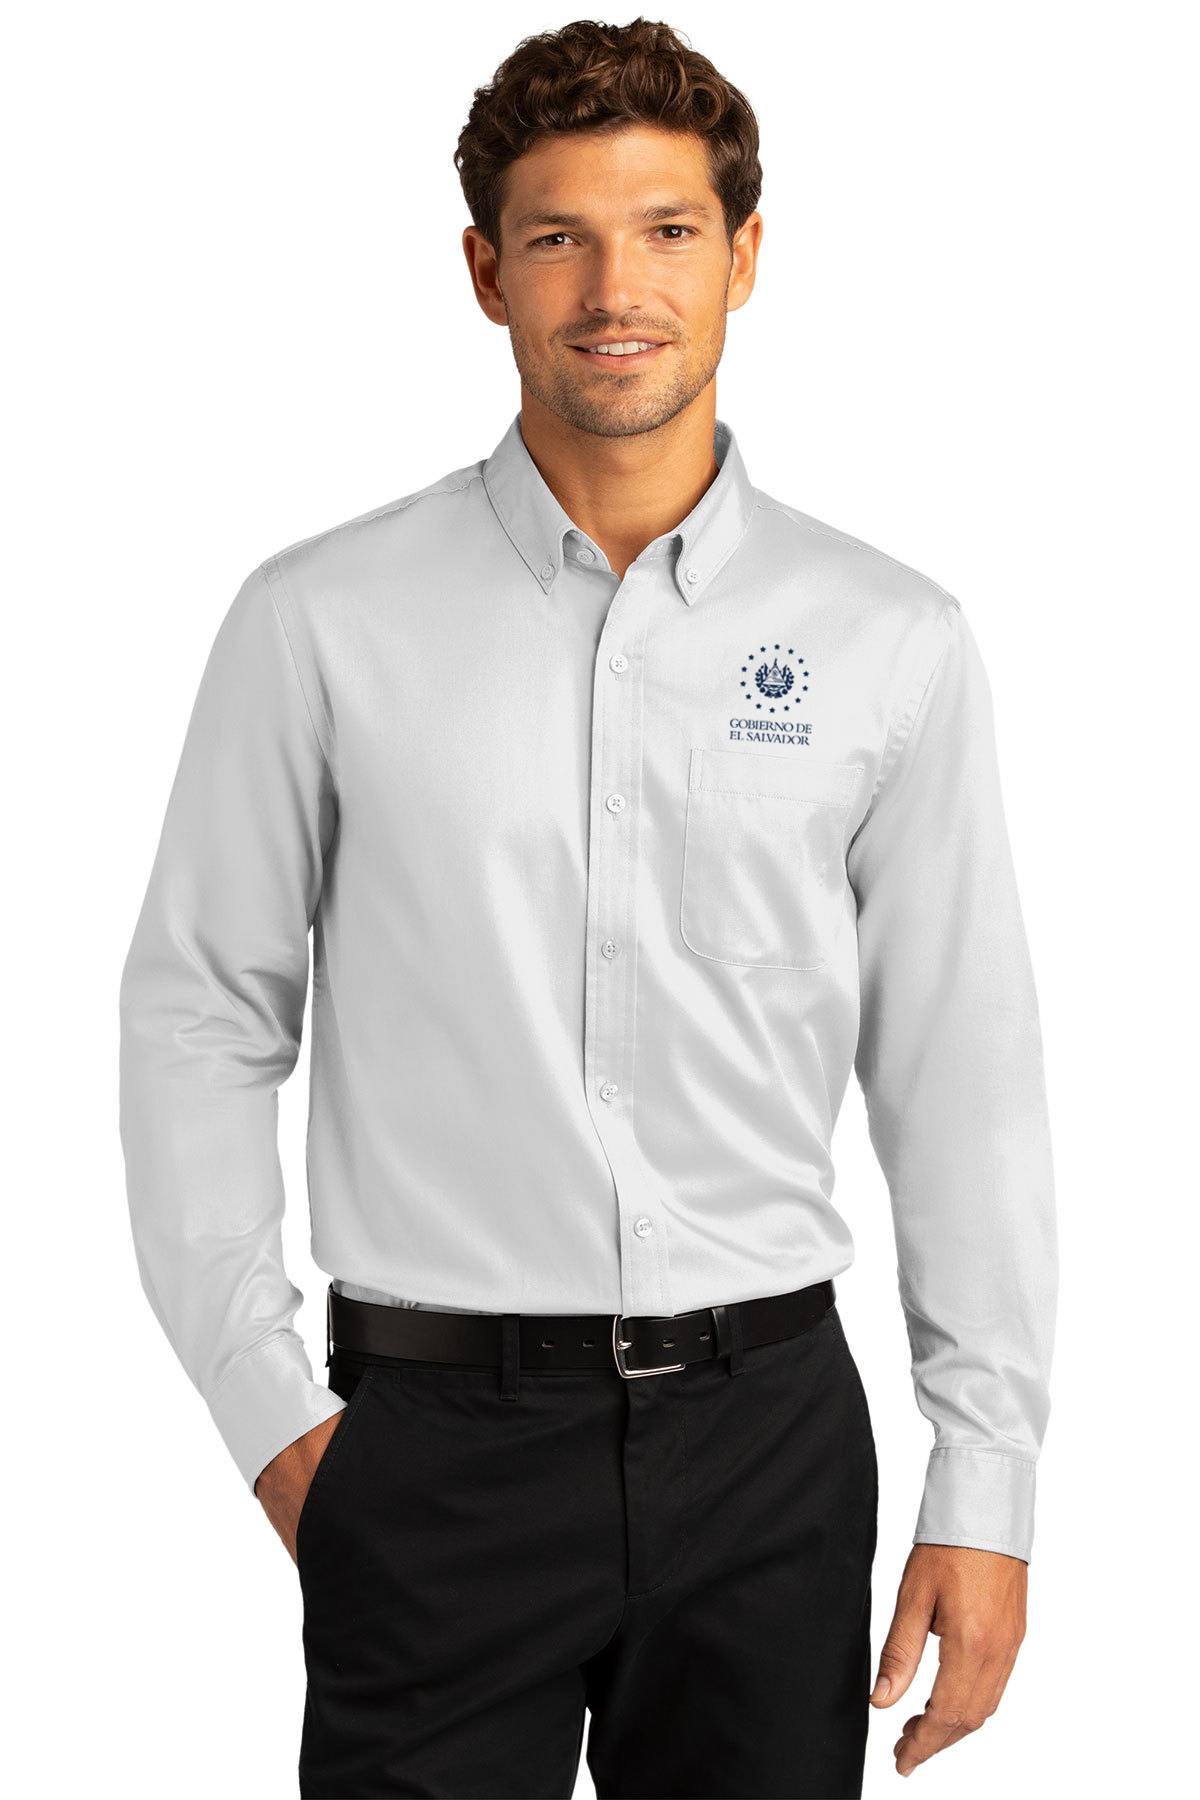 Consulado de El Salvador Long Sleeve SuperPro React™ Twill Shirt